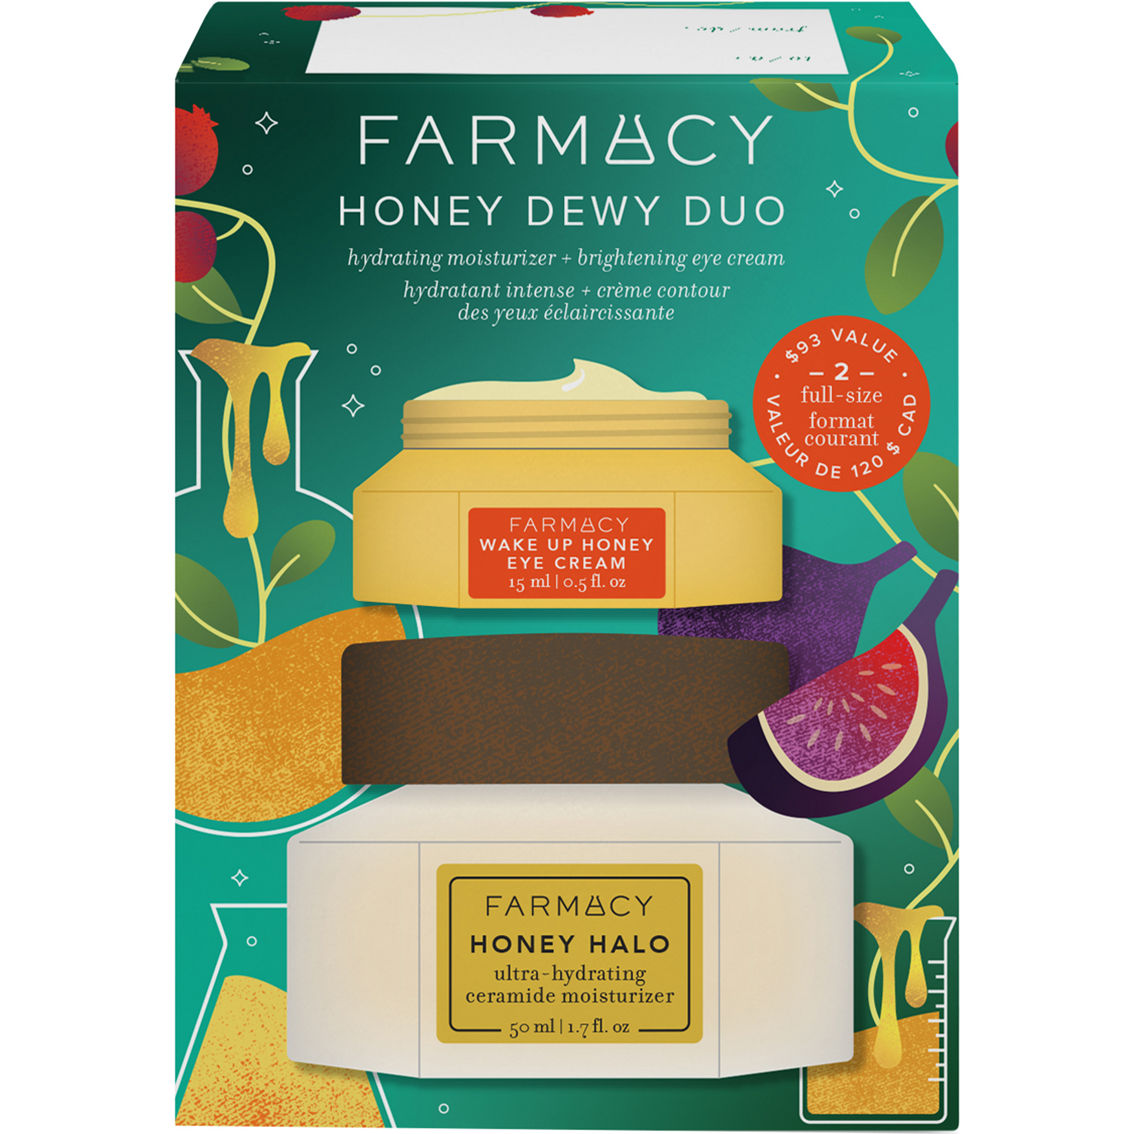 Farmacy Honey Dewy Duo - Image 2 of 3